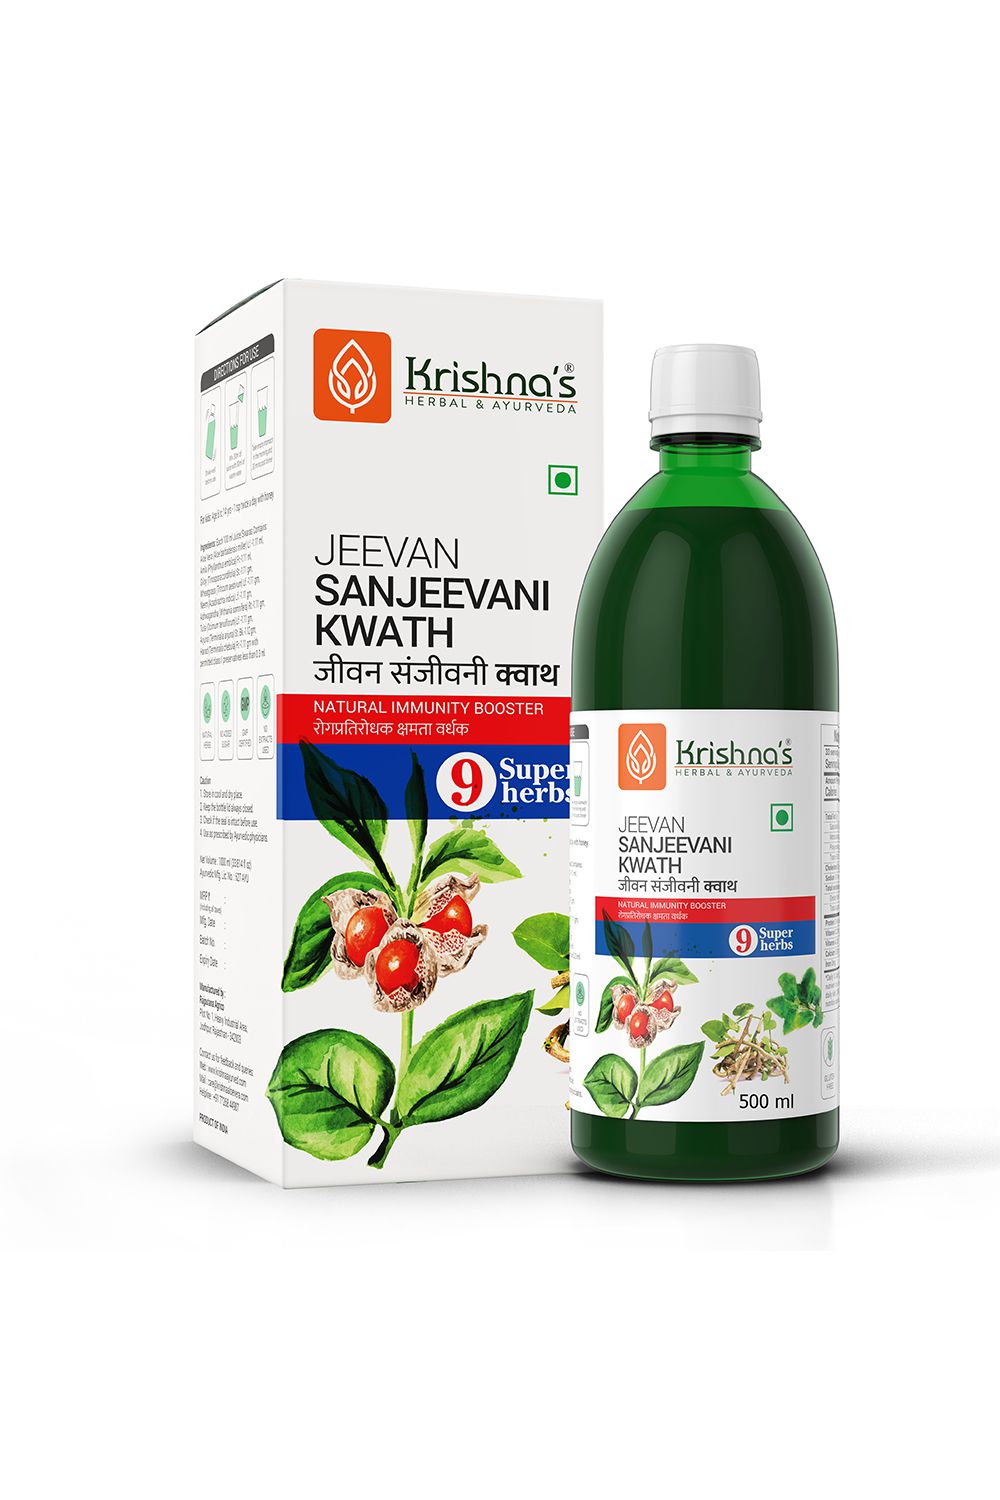     			Krishna's Herbal & Ayurveda Jeevan Sanjeevani Kwath 500ml